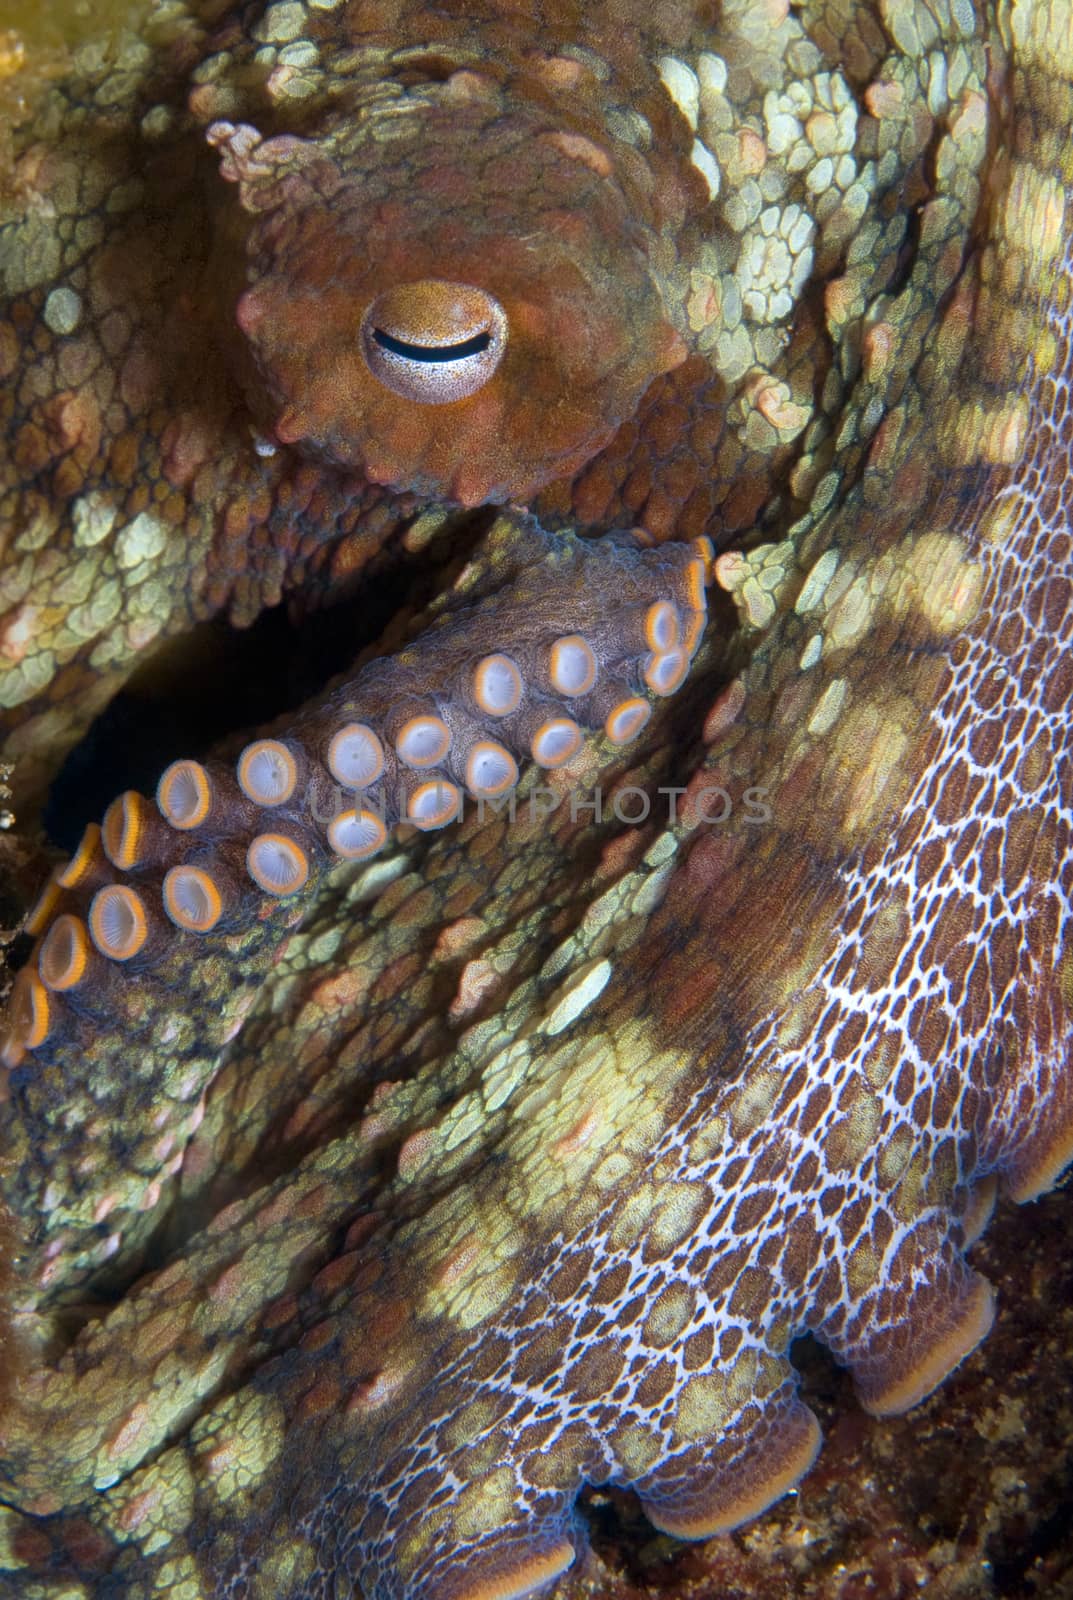 Octopus by Njean